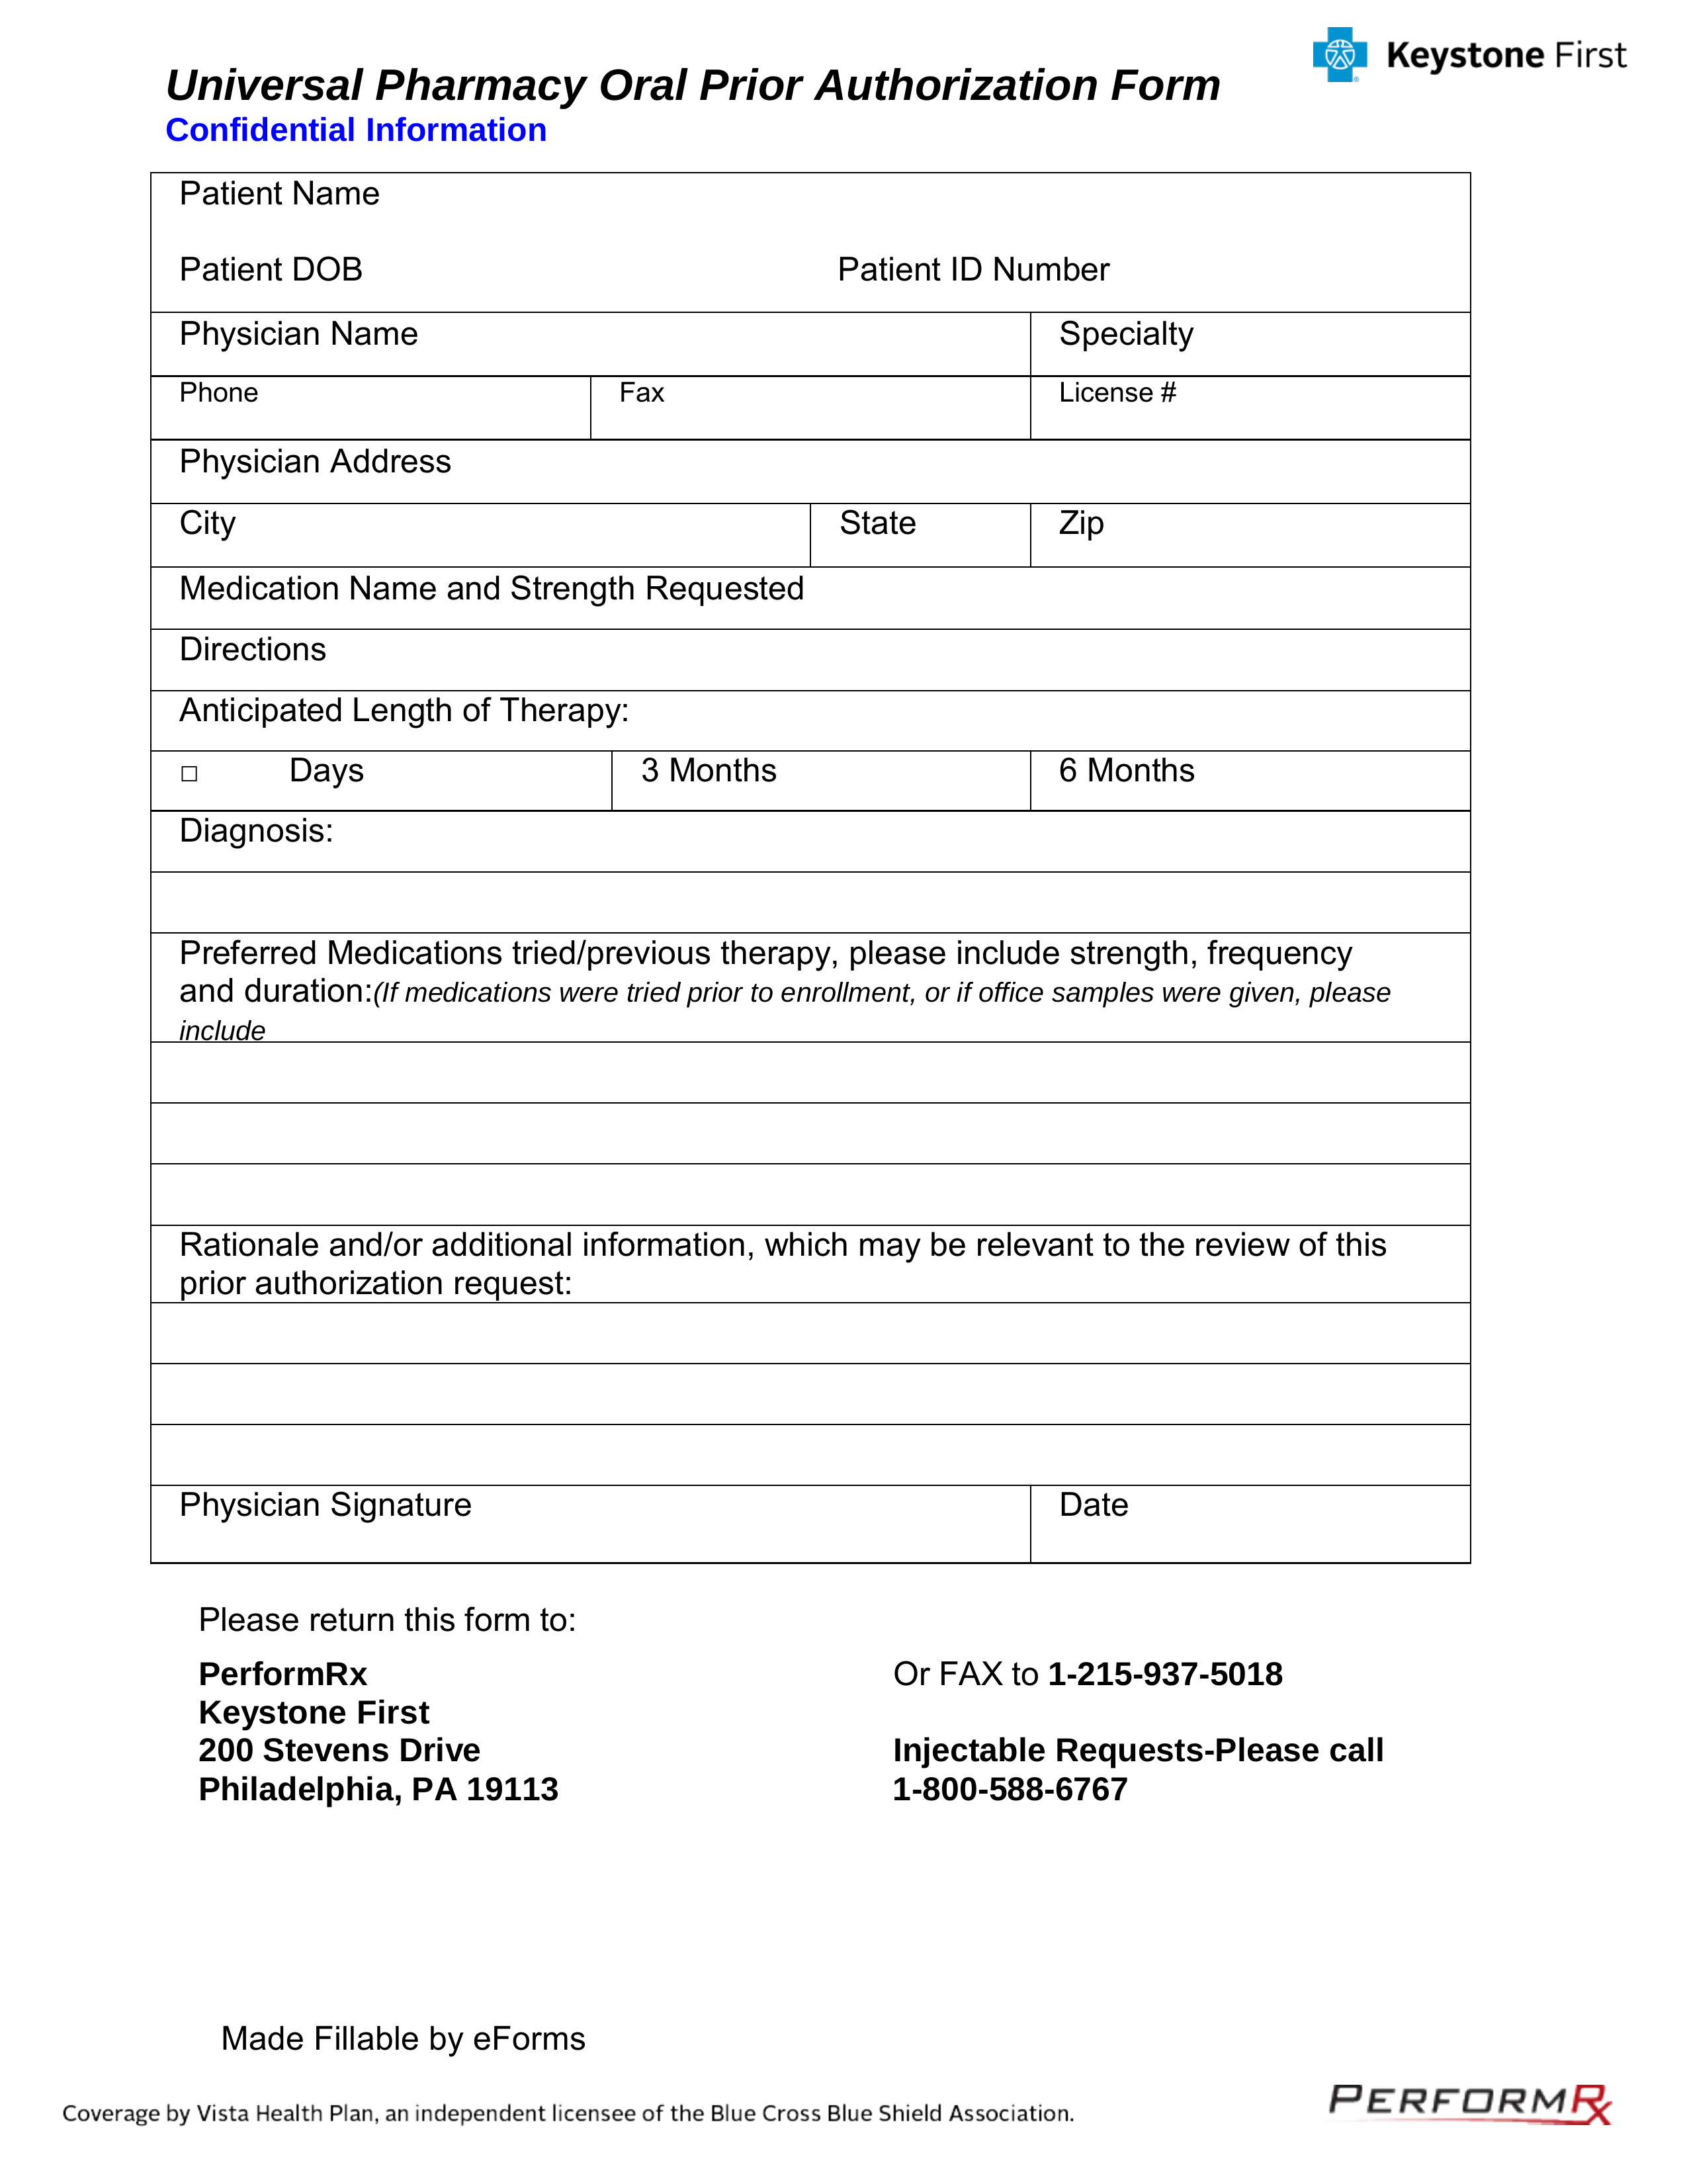 Keystone First (Rx) Prior Authorization Form